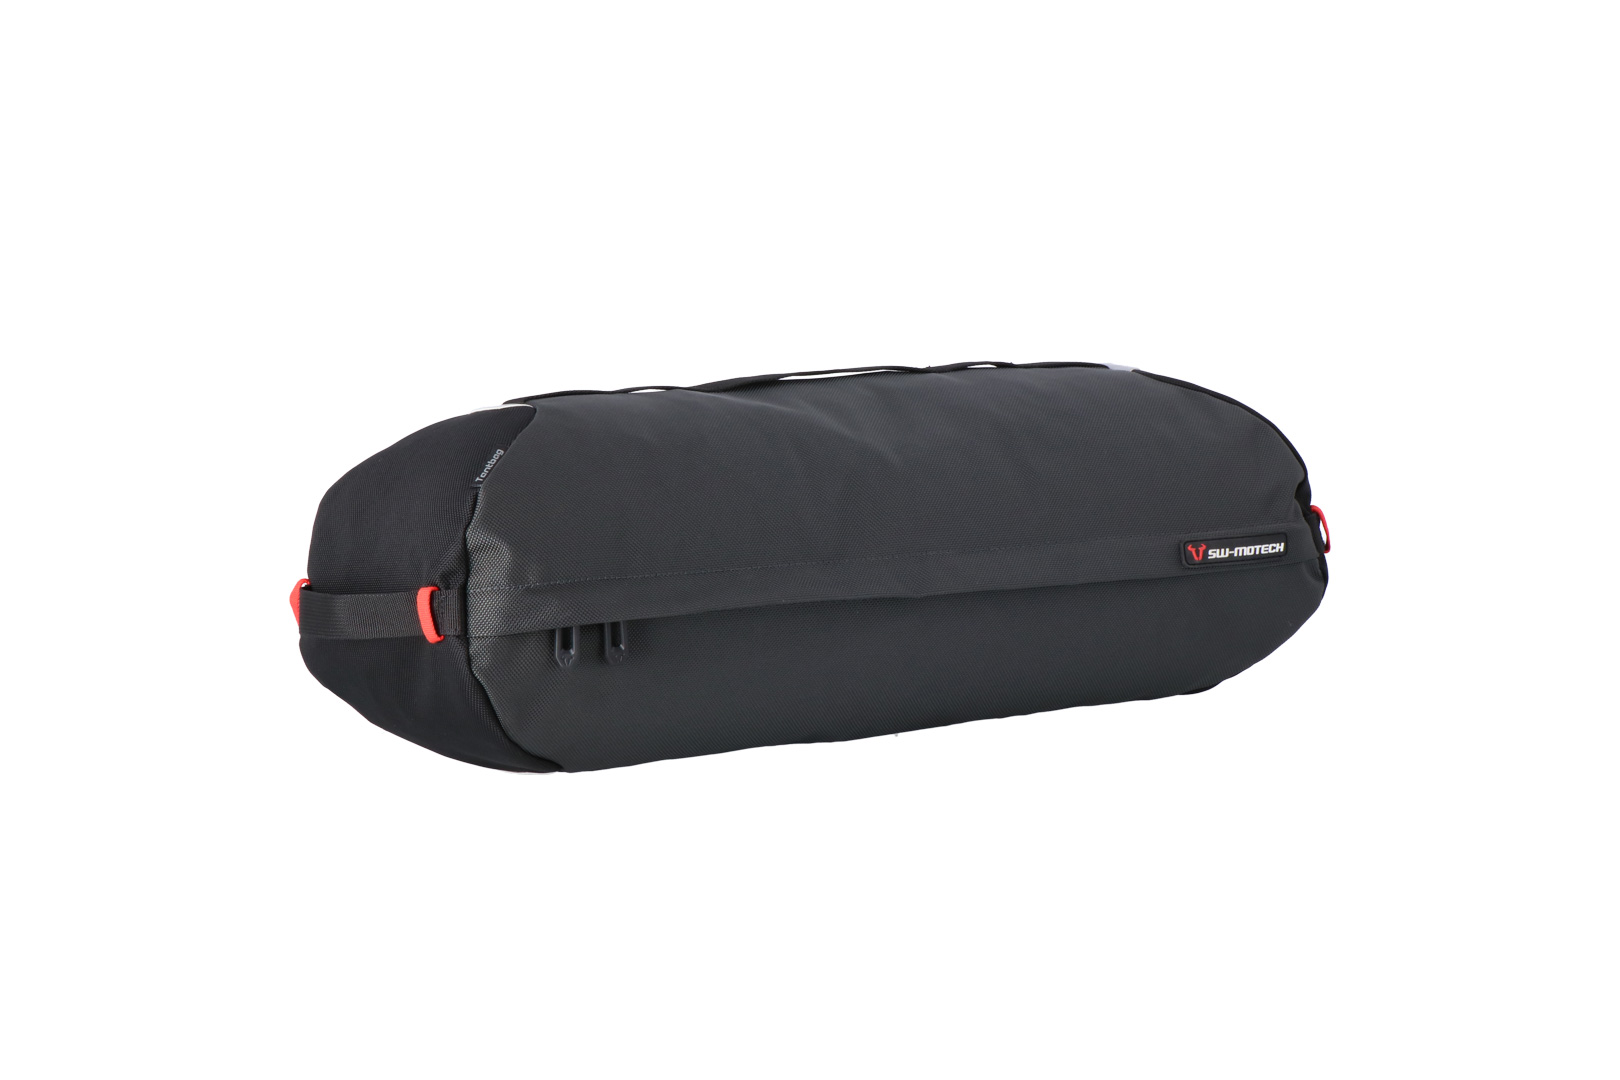 SW-Motech PRO Tentbag tail bag - 1680D Ballistic Nylon. Black/Anthracite. 18 l., black